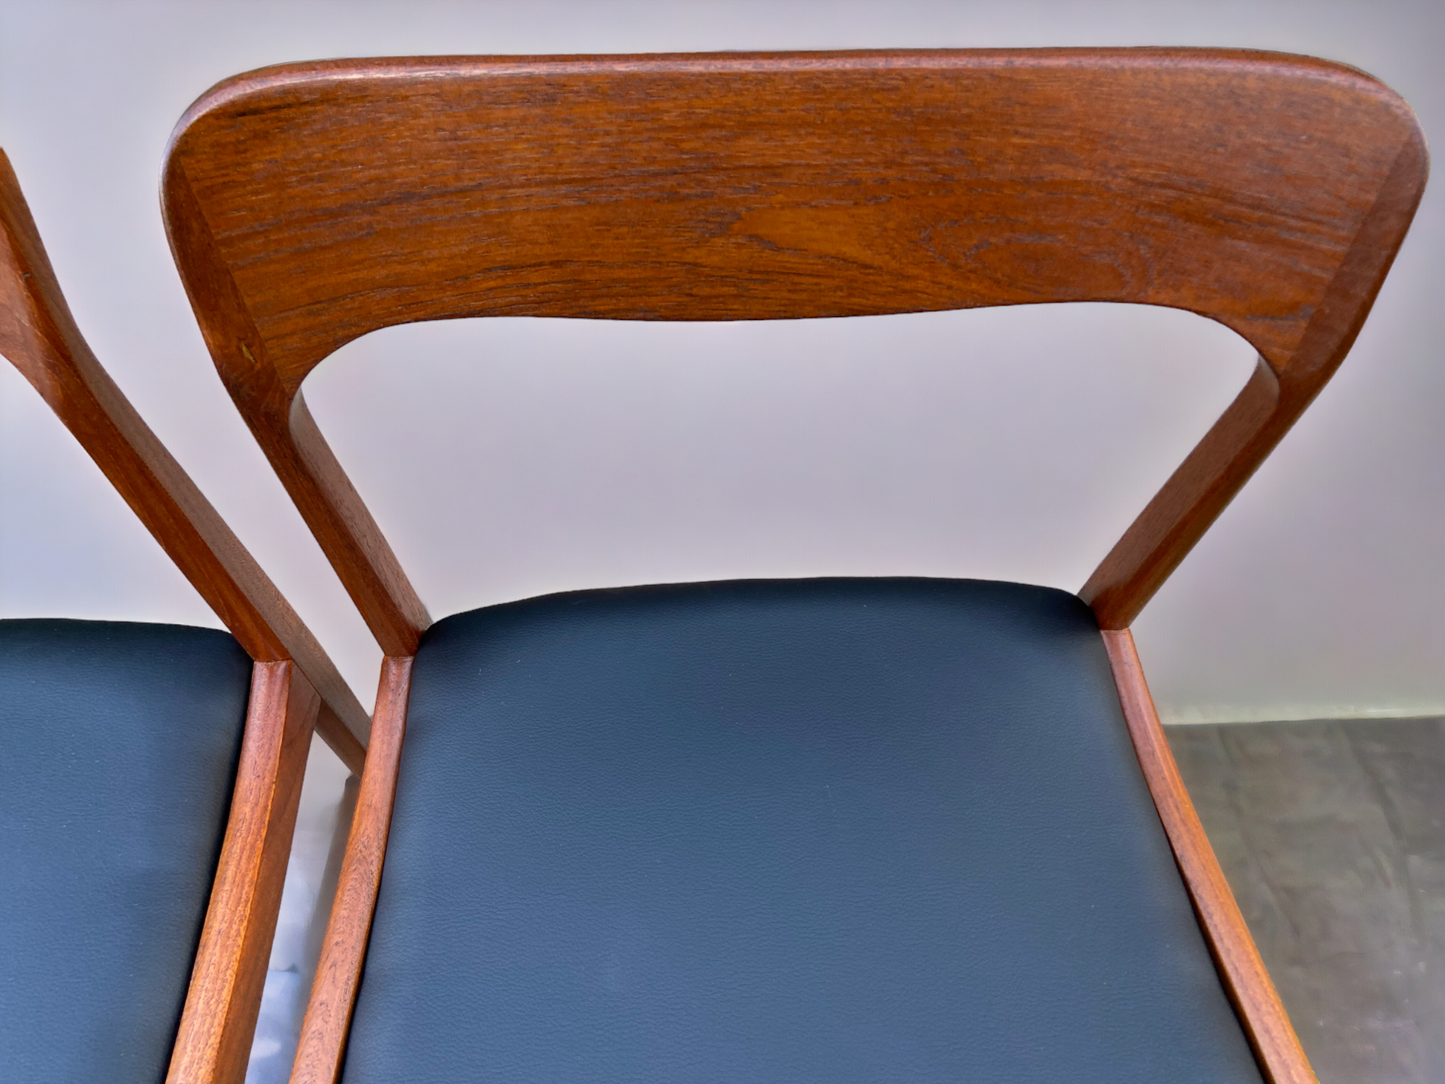 4 REFINISHED Danish Mid Century Modern Teak Chairs, Moller style